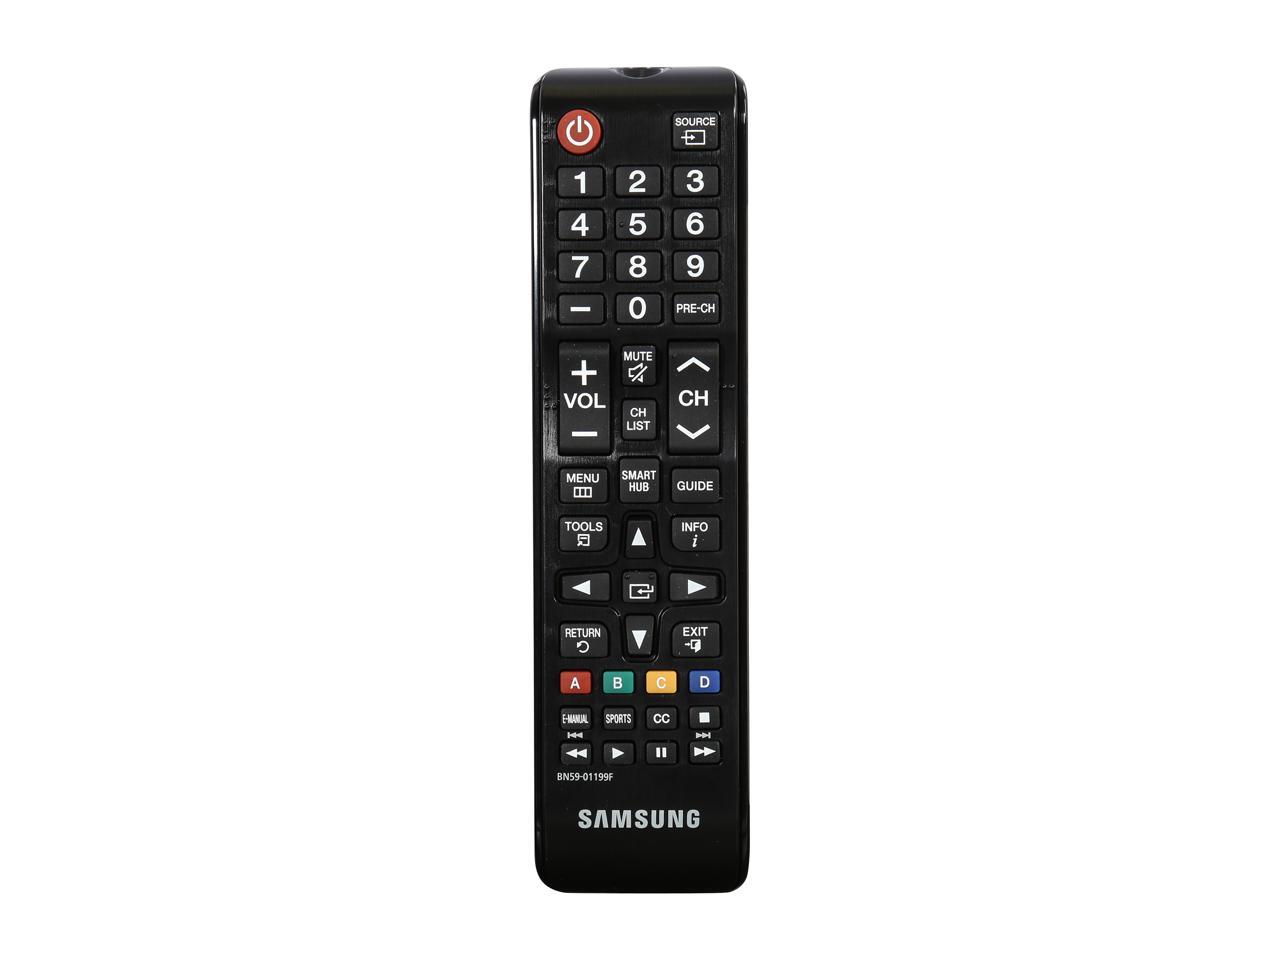 Samsung Un40j5200afxza 40 Inch 1080p Hd Smart Led Tv 3859